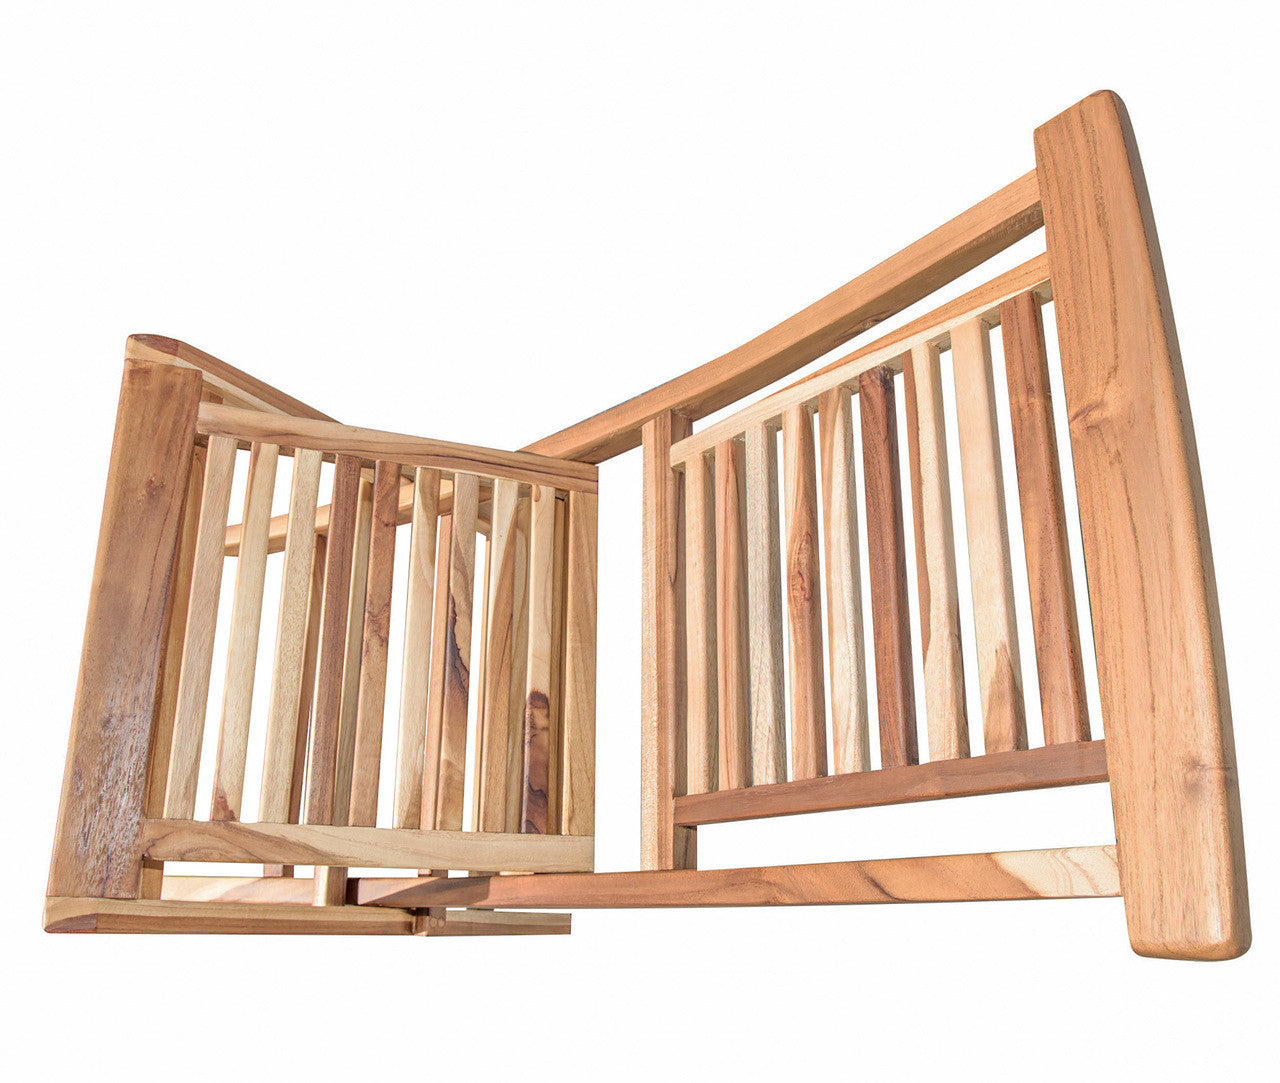 EcoDecors® Teak Wood Folding Chair in EarthyTeak Finish